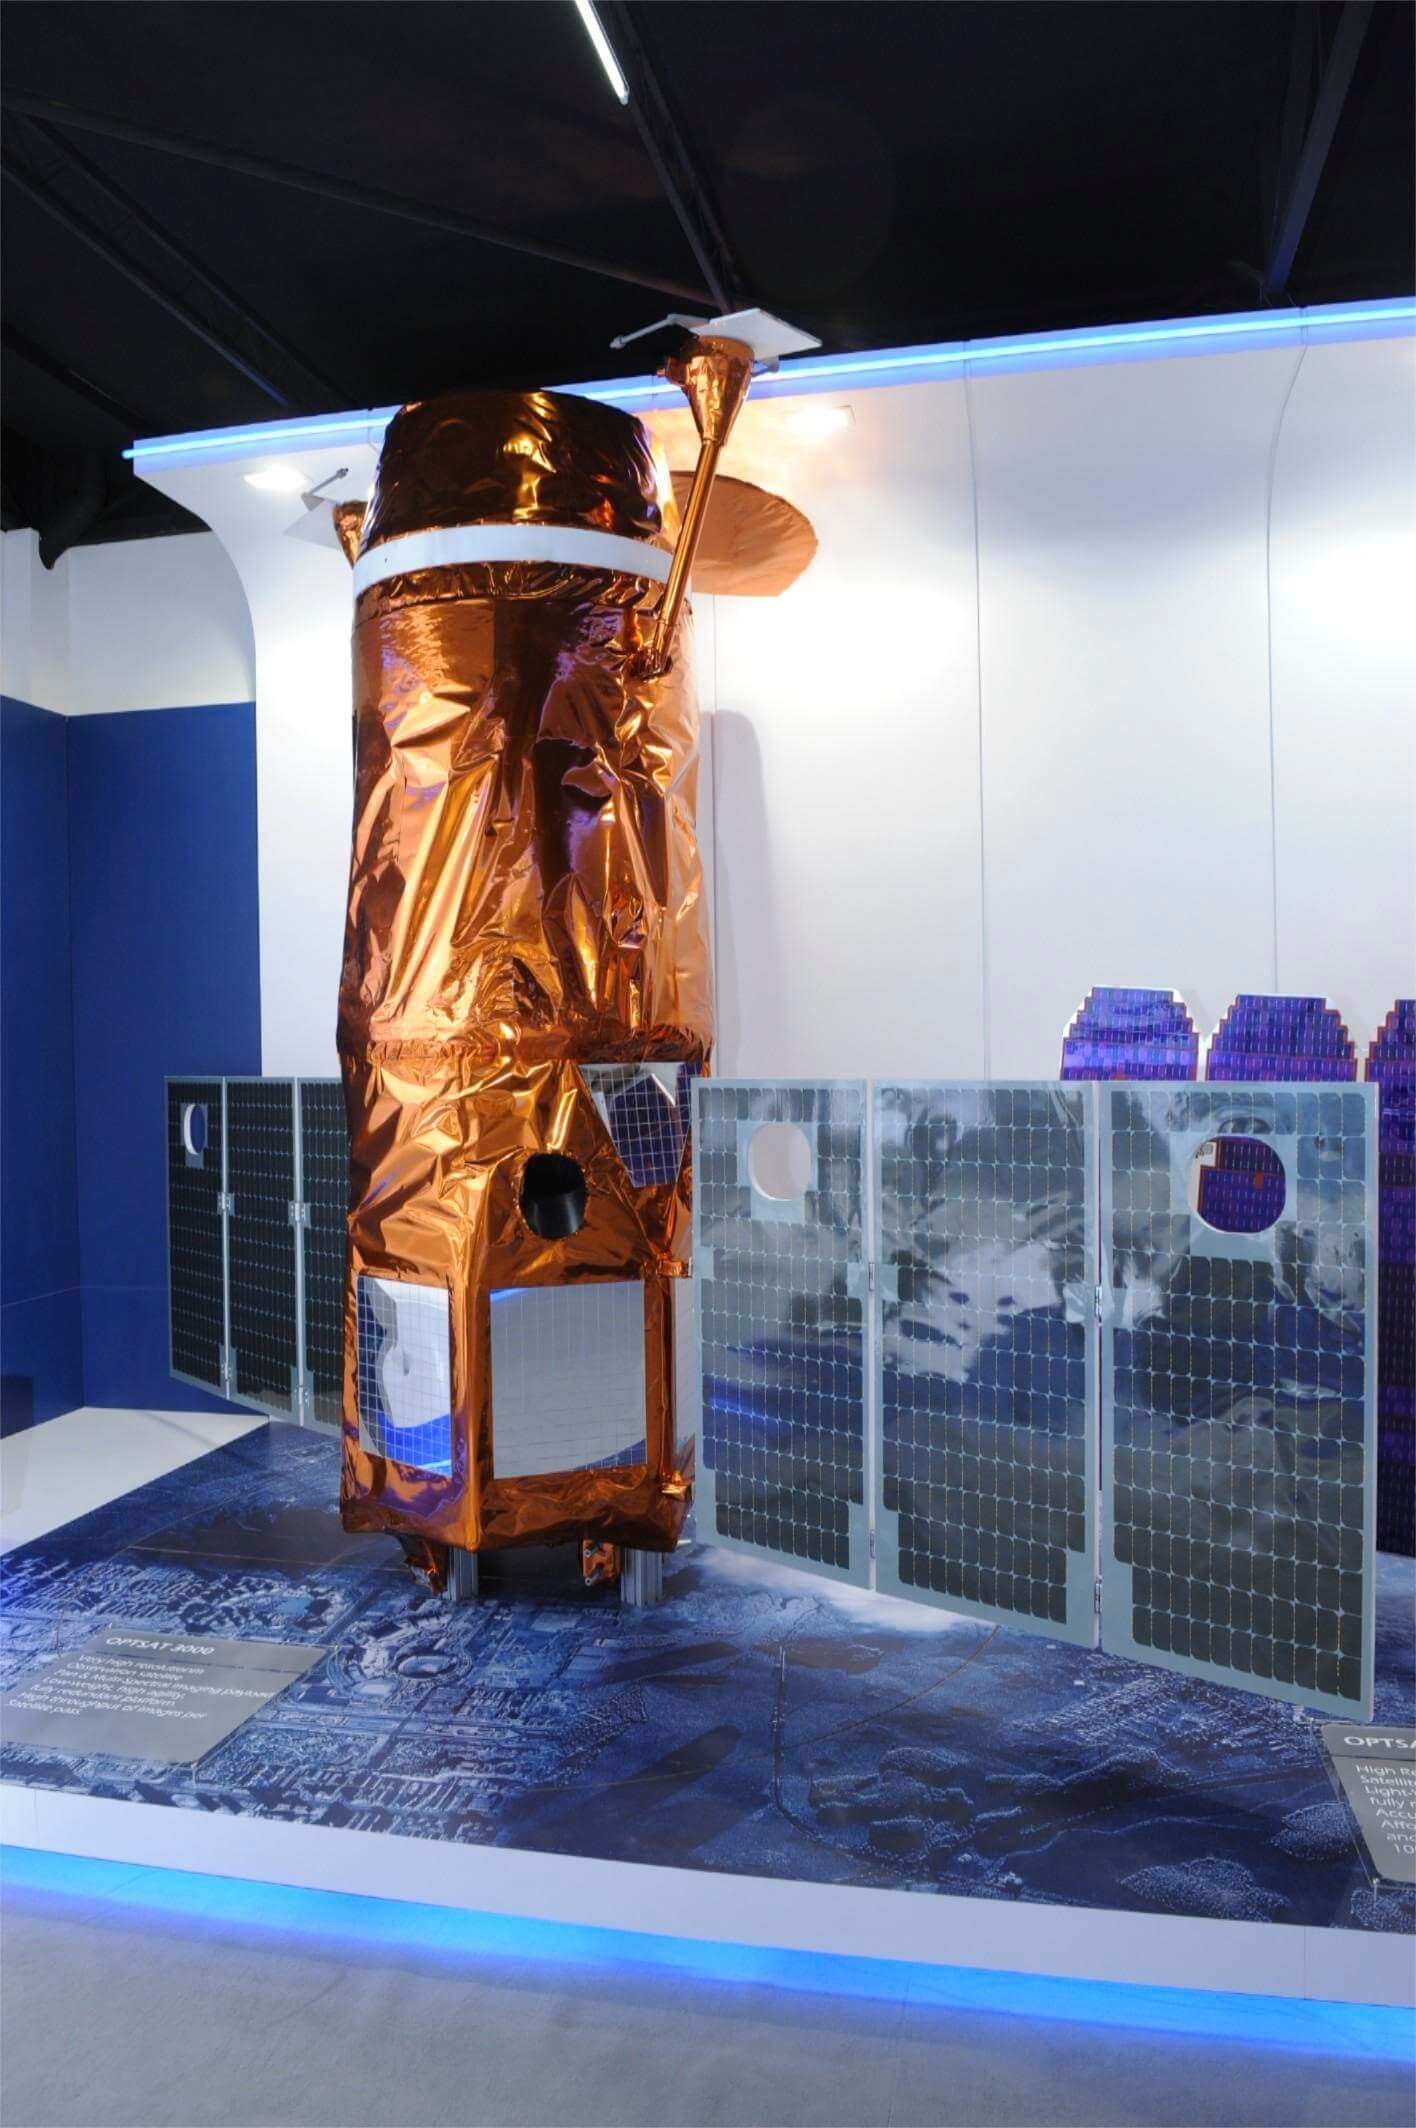 OPTSAT 3000 model observation satellite developed in the aviation industry